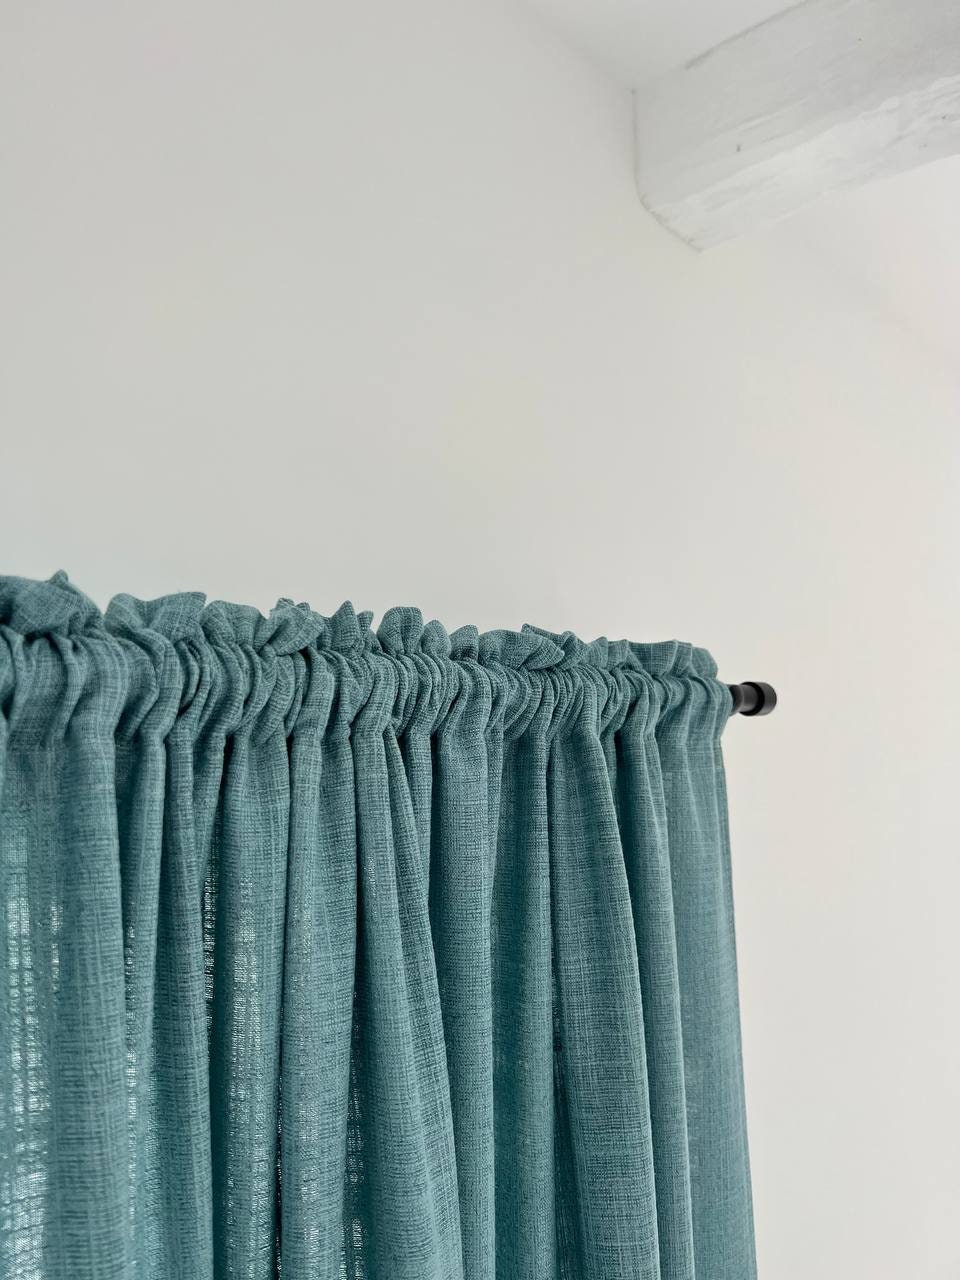 2 Panel Burlap Blackout Curtains for Bedroom / Teal Blue - Etsy